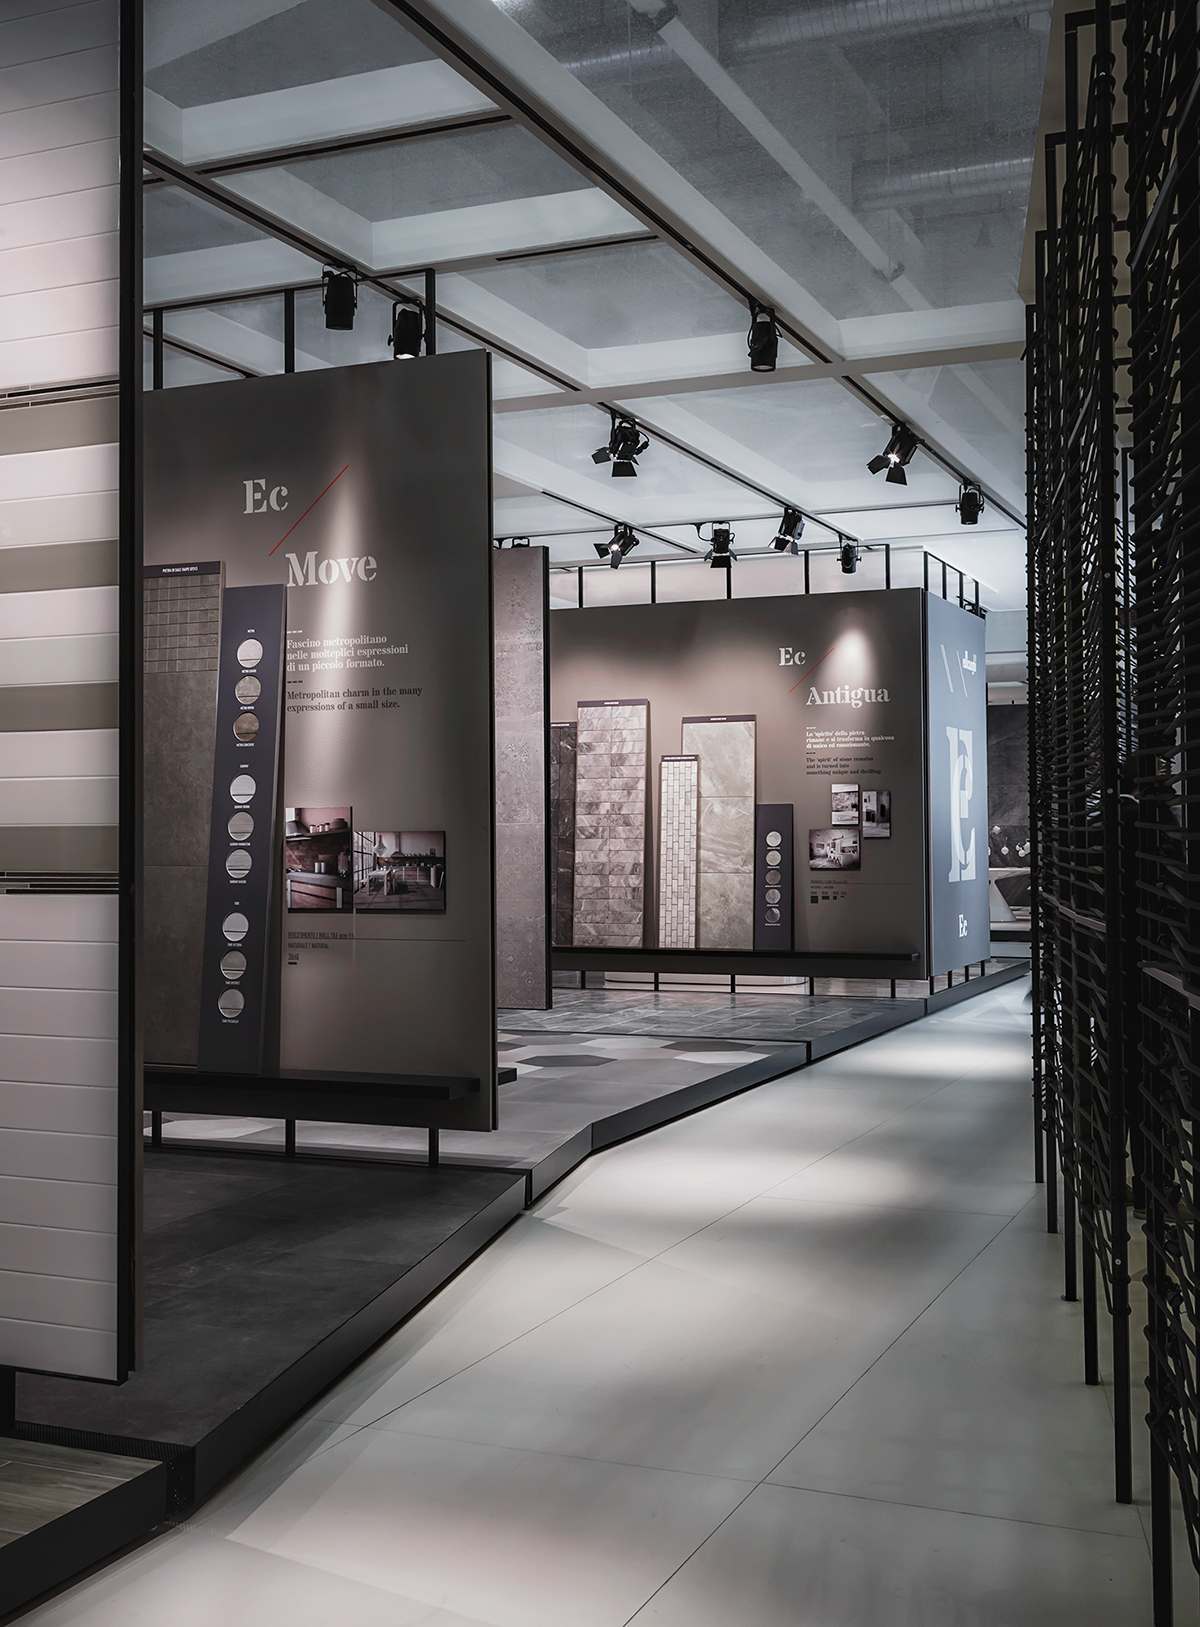 ceramics  cersaie milano minimal black digital mdf tiles rope brown showroom Suspension styling  frame